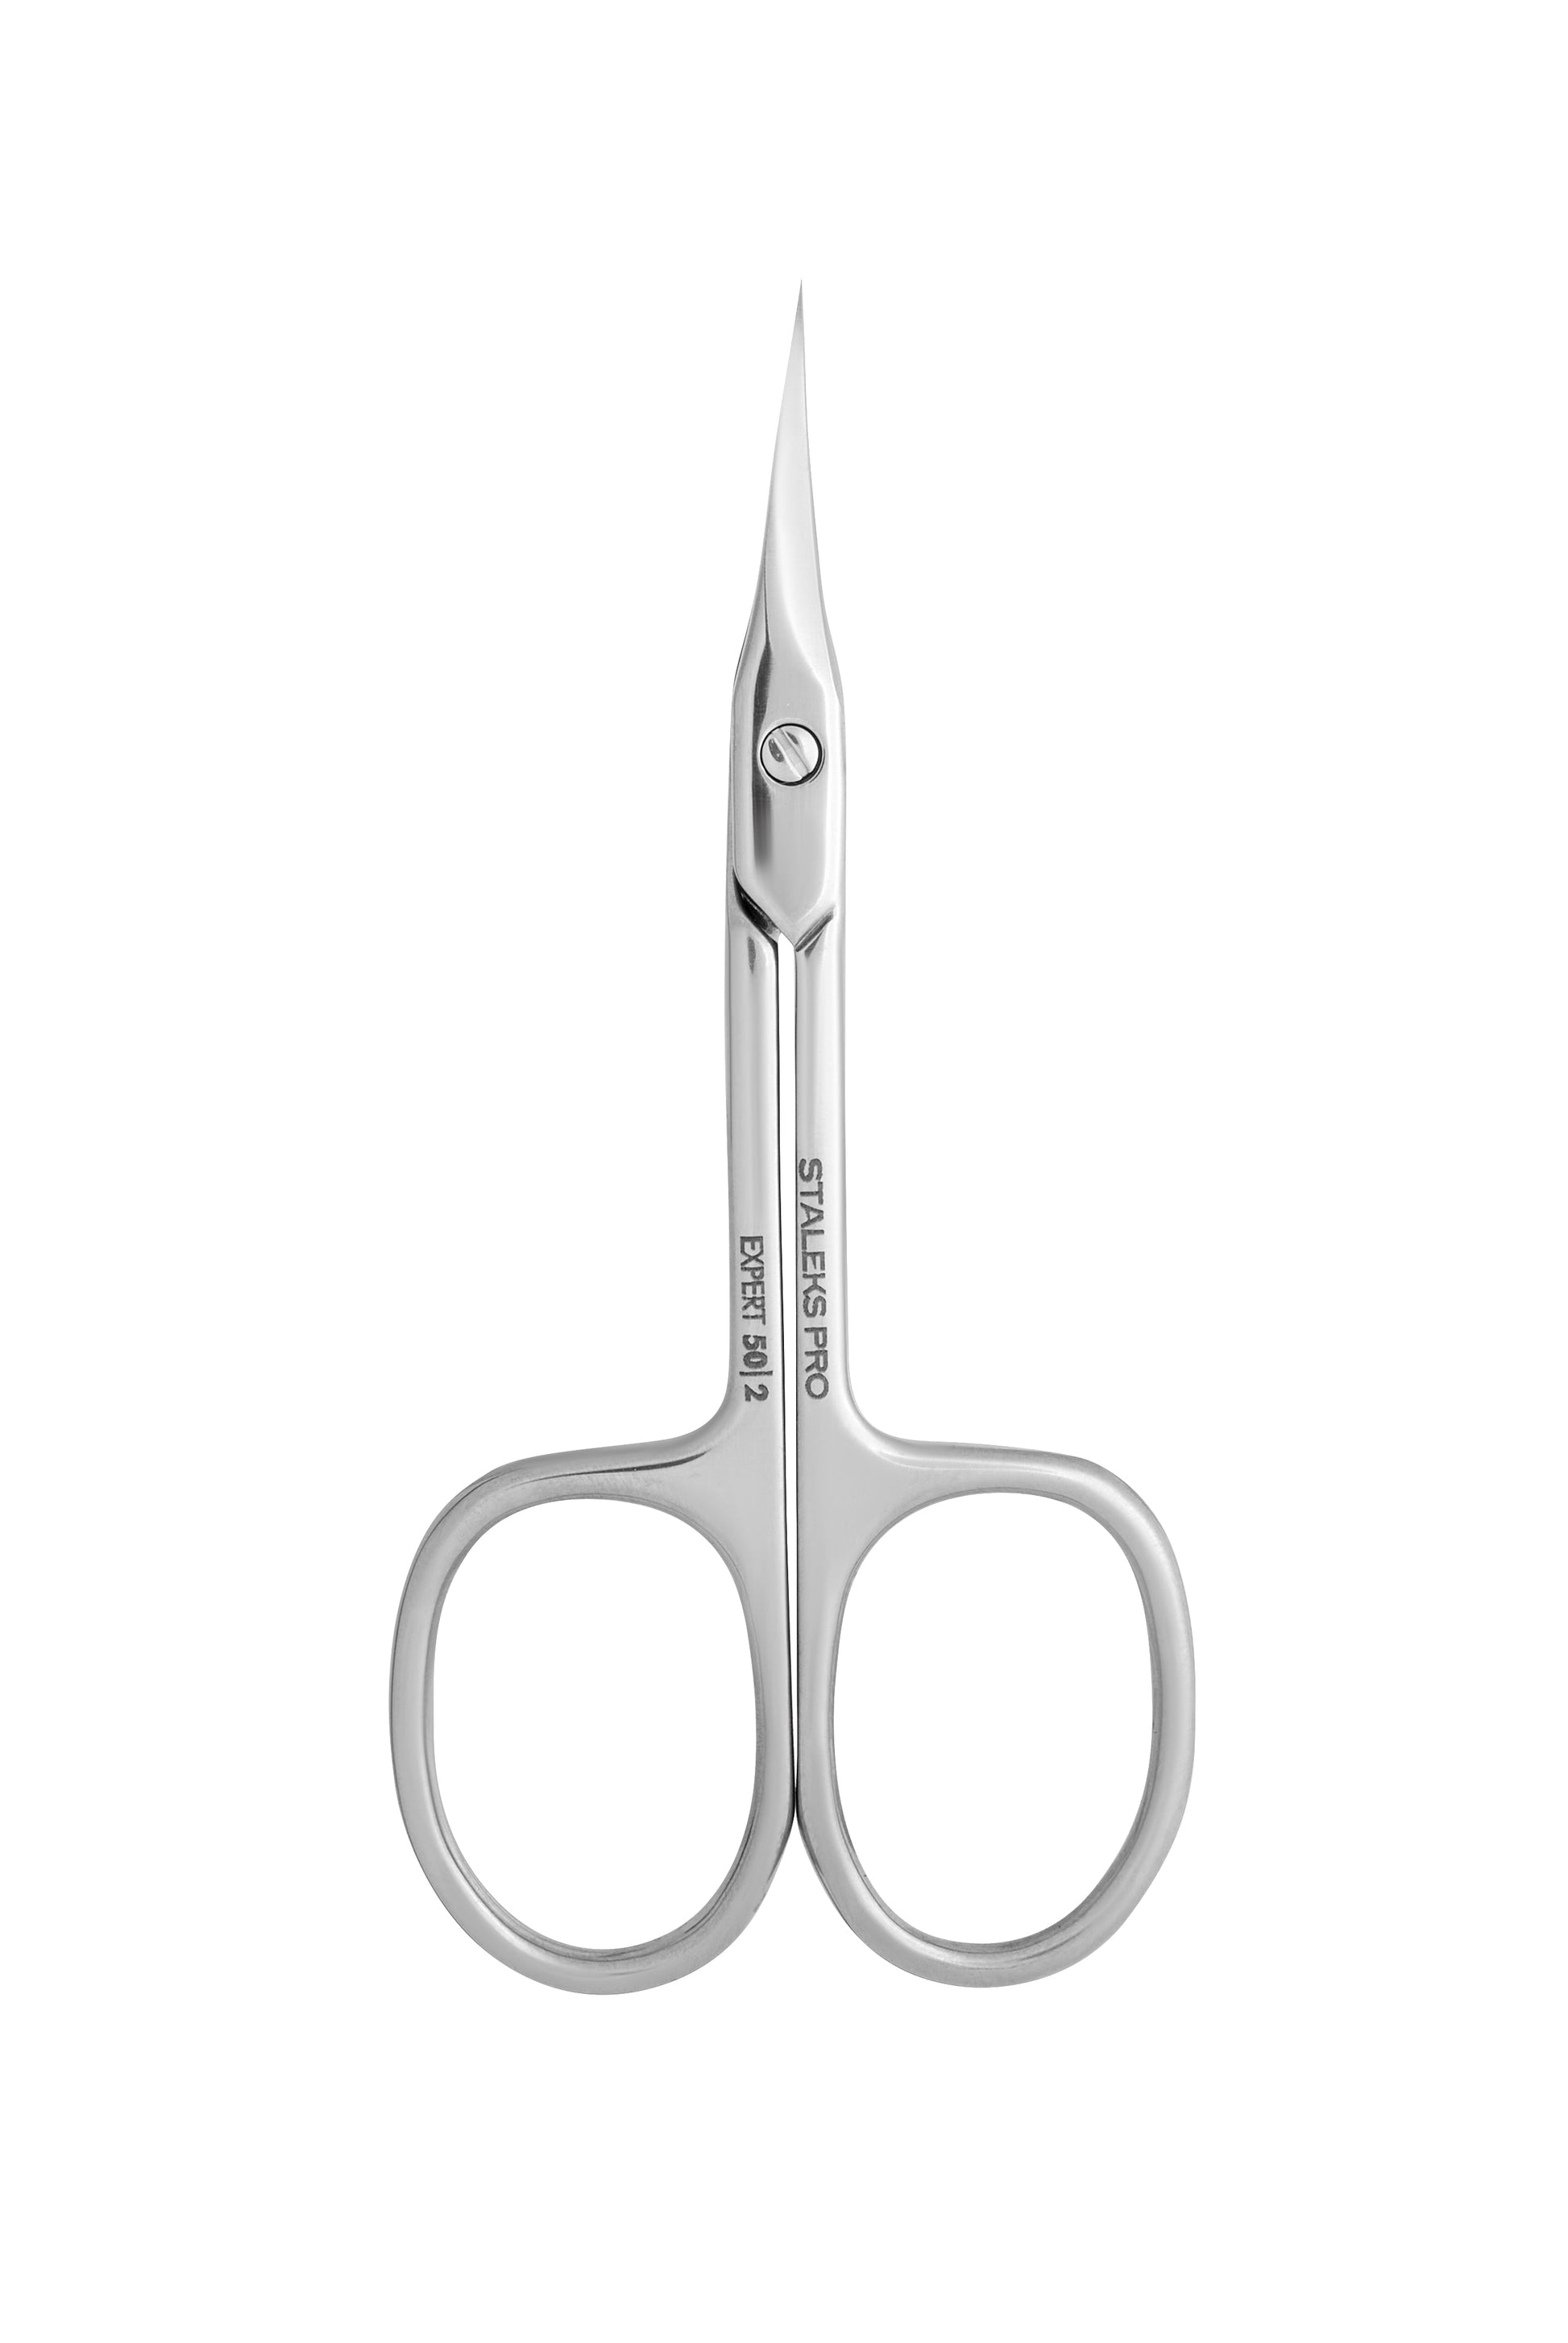 STALEKS-Cuticle scissors EXPERT 50 TYPE 2 Professional-1